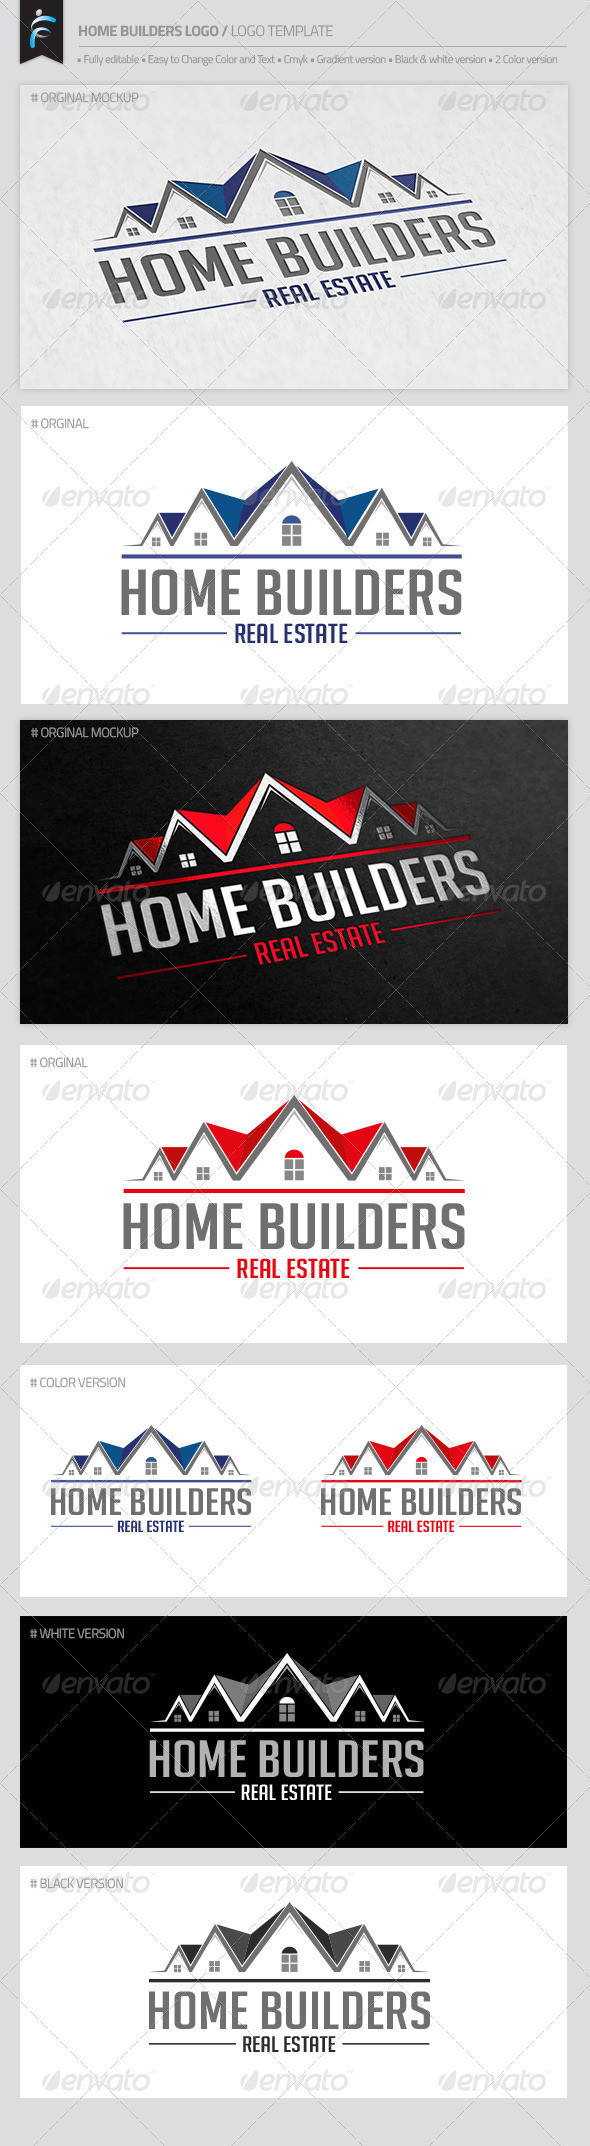 Home builders logo